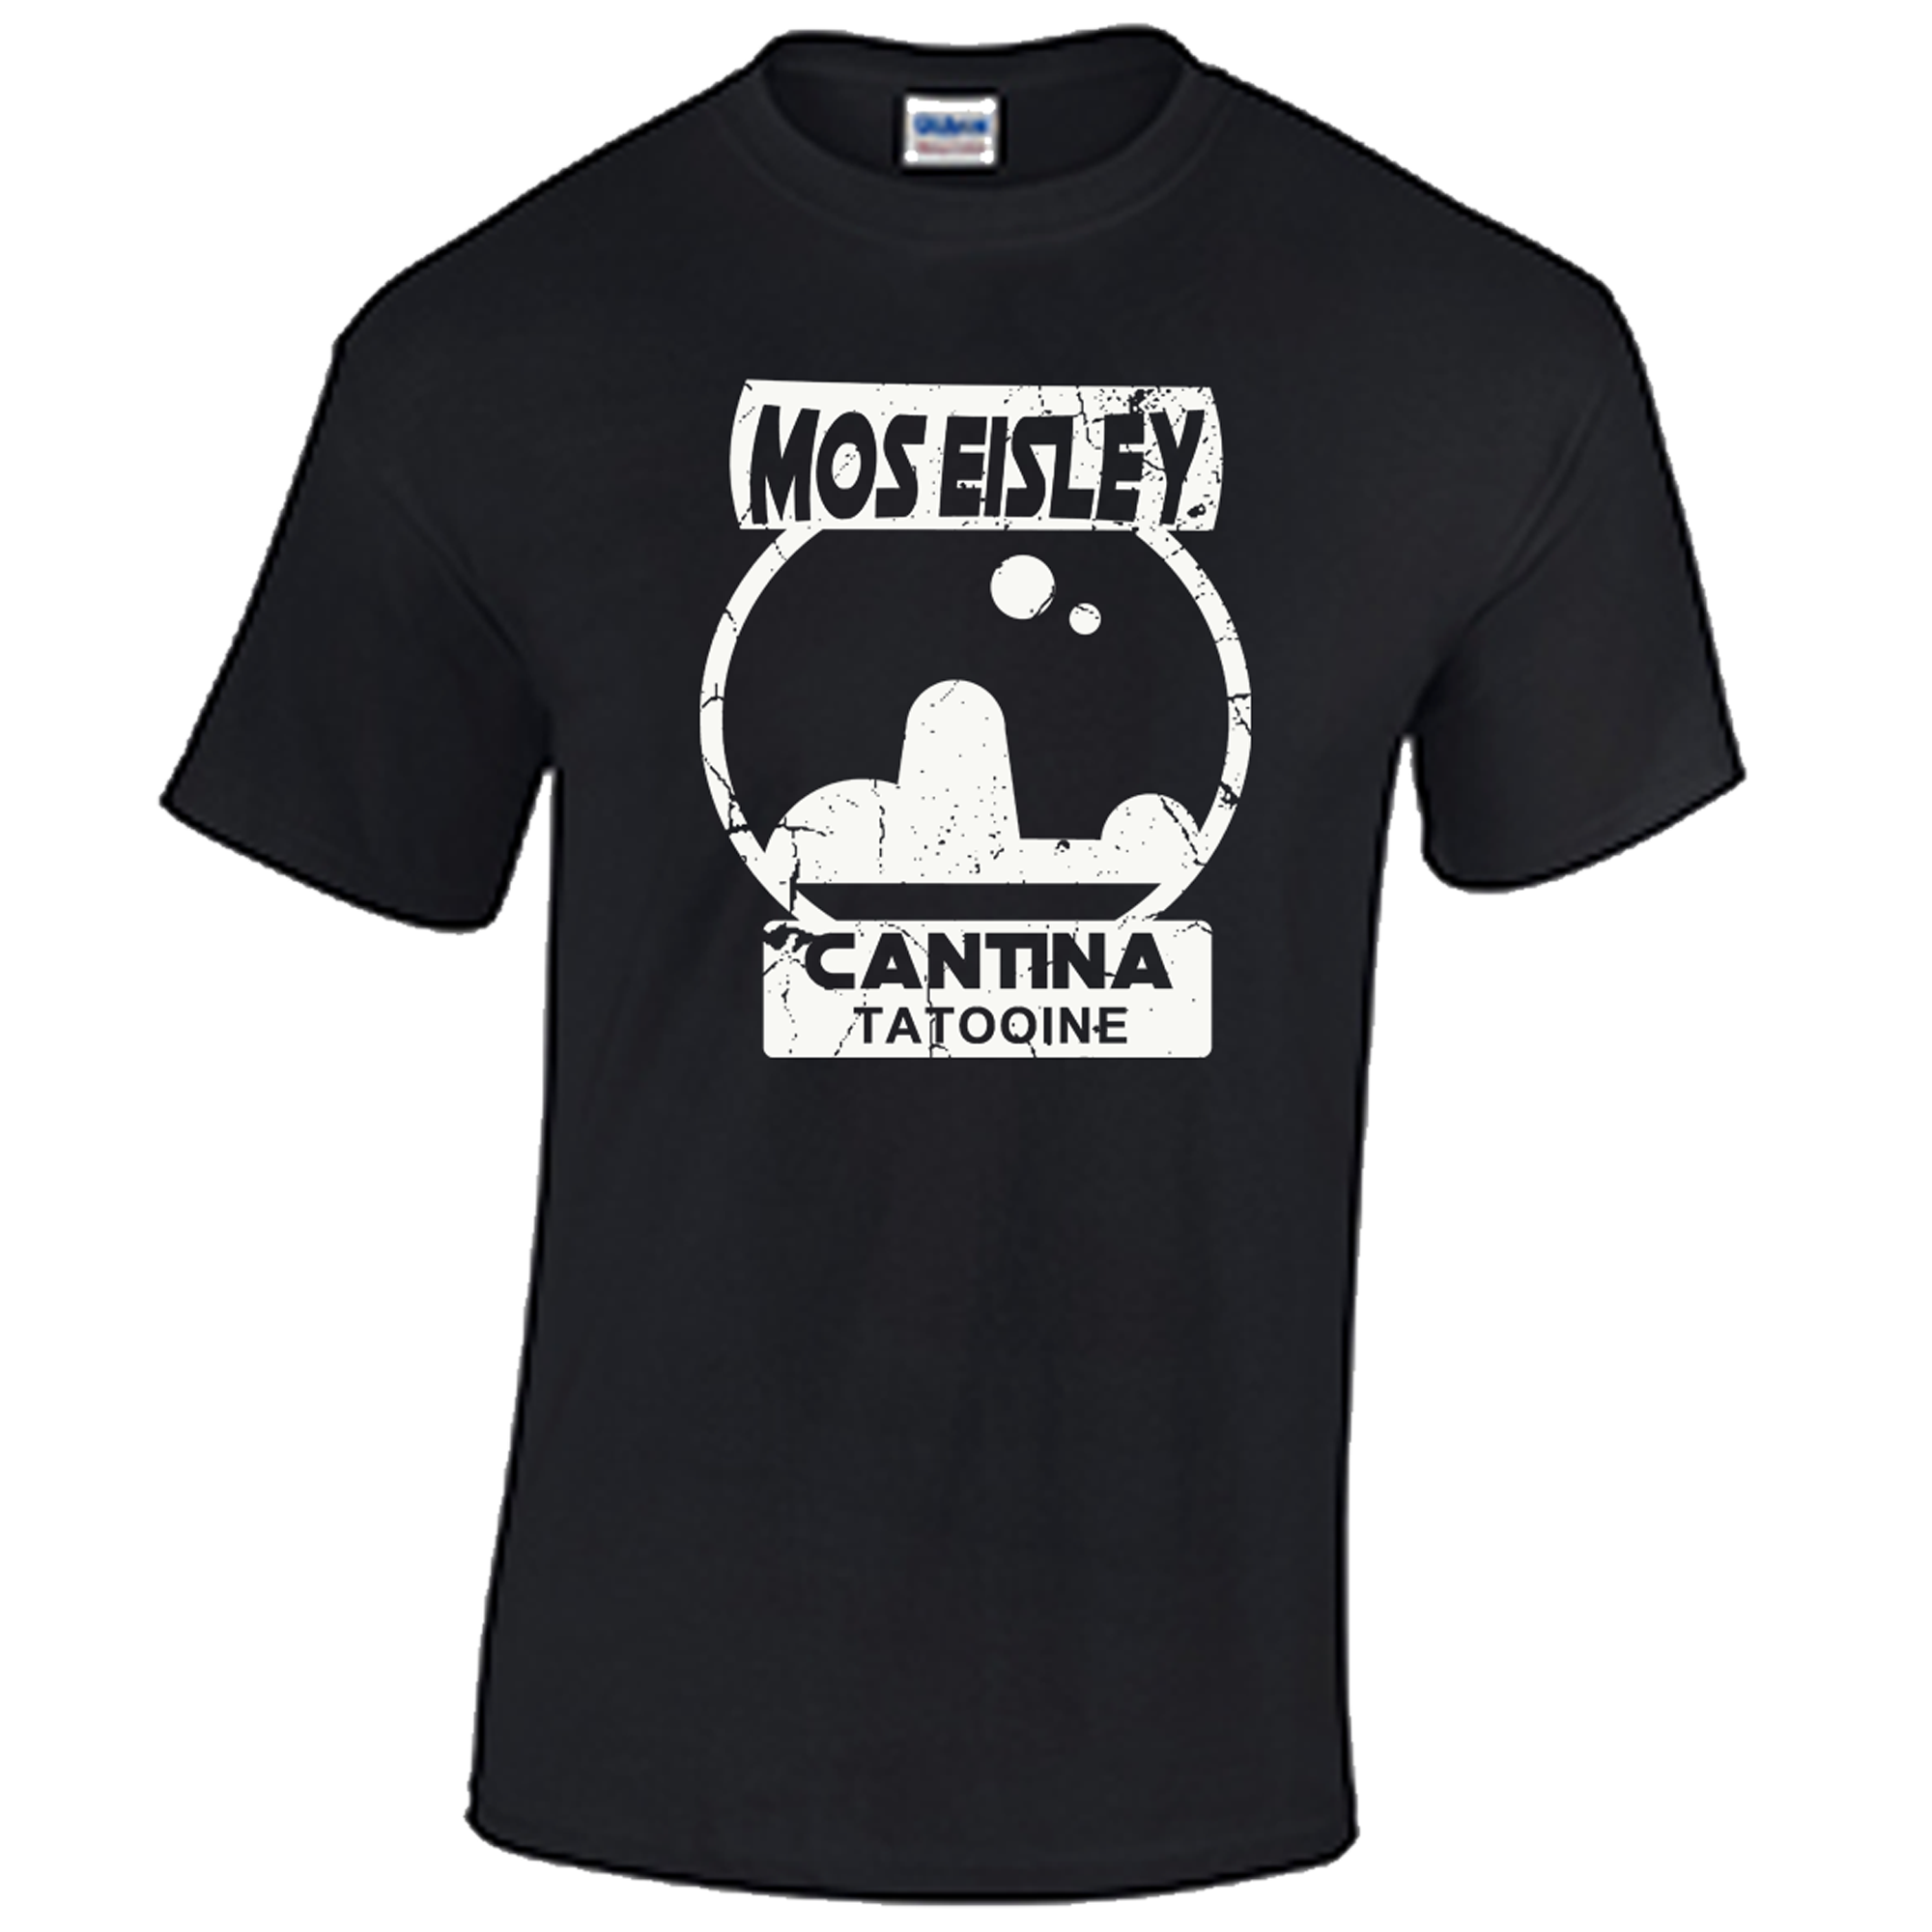 Mos Eisley Cantina Tee Shirt, Star Wars Shirt, Tatooine Cantina, Luke Skywalker T Shirt, A New Hope Shirt, Empire Strikes Back T Shirt